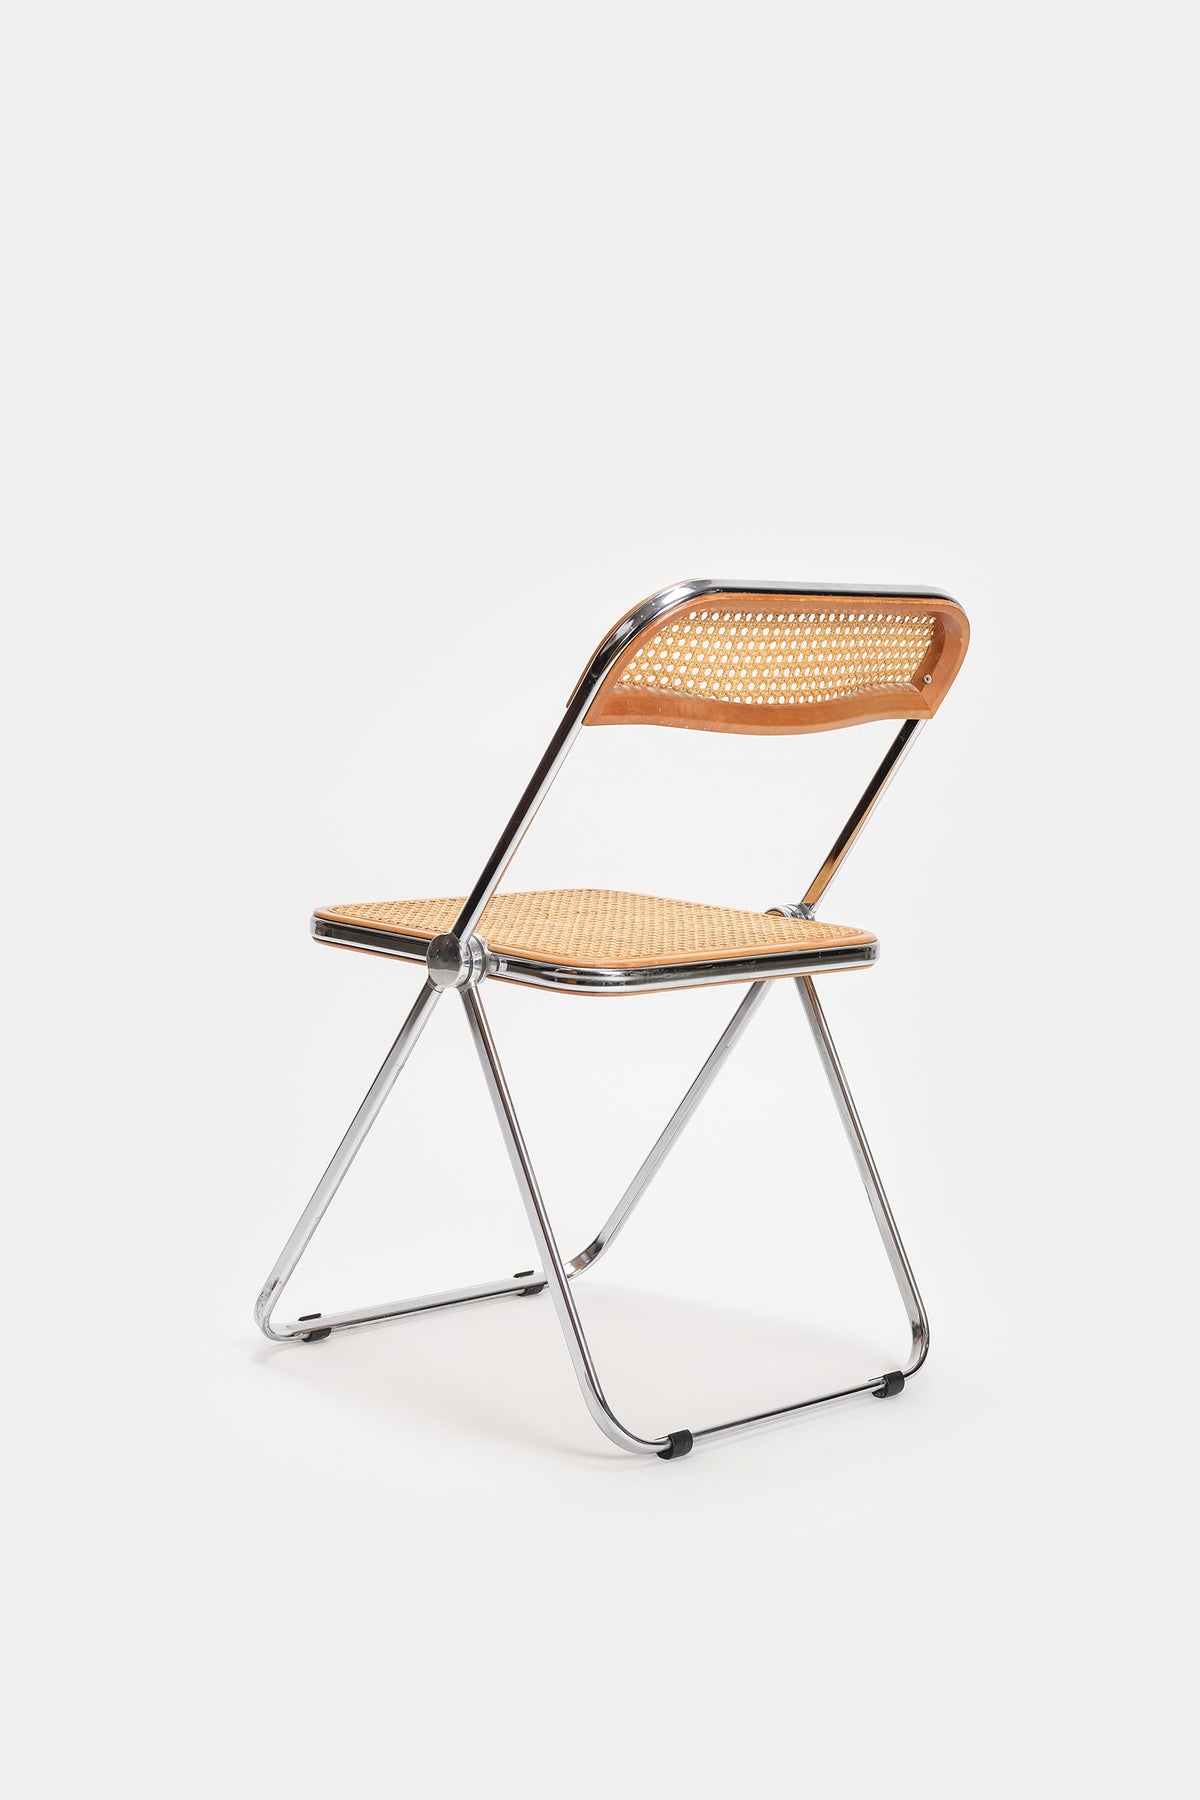 Giancarlo Piretti, Plia Folding Chair, 70s